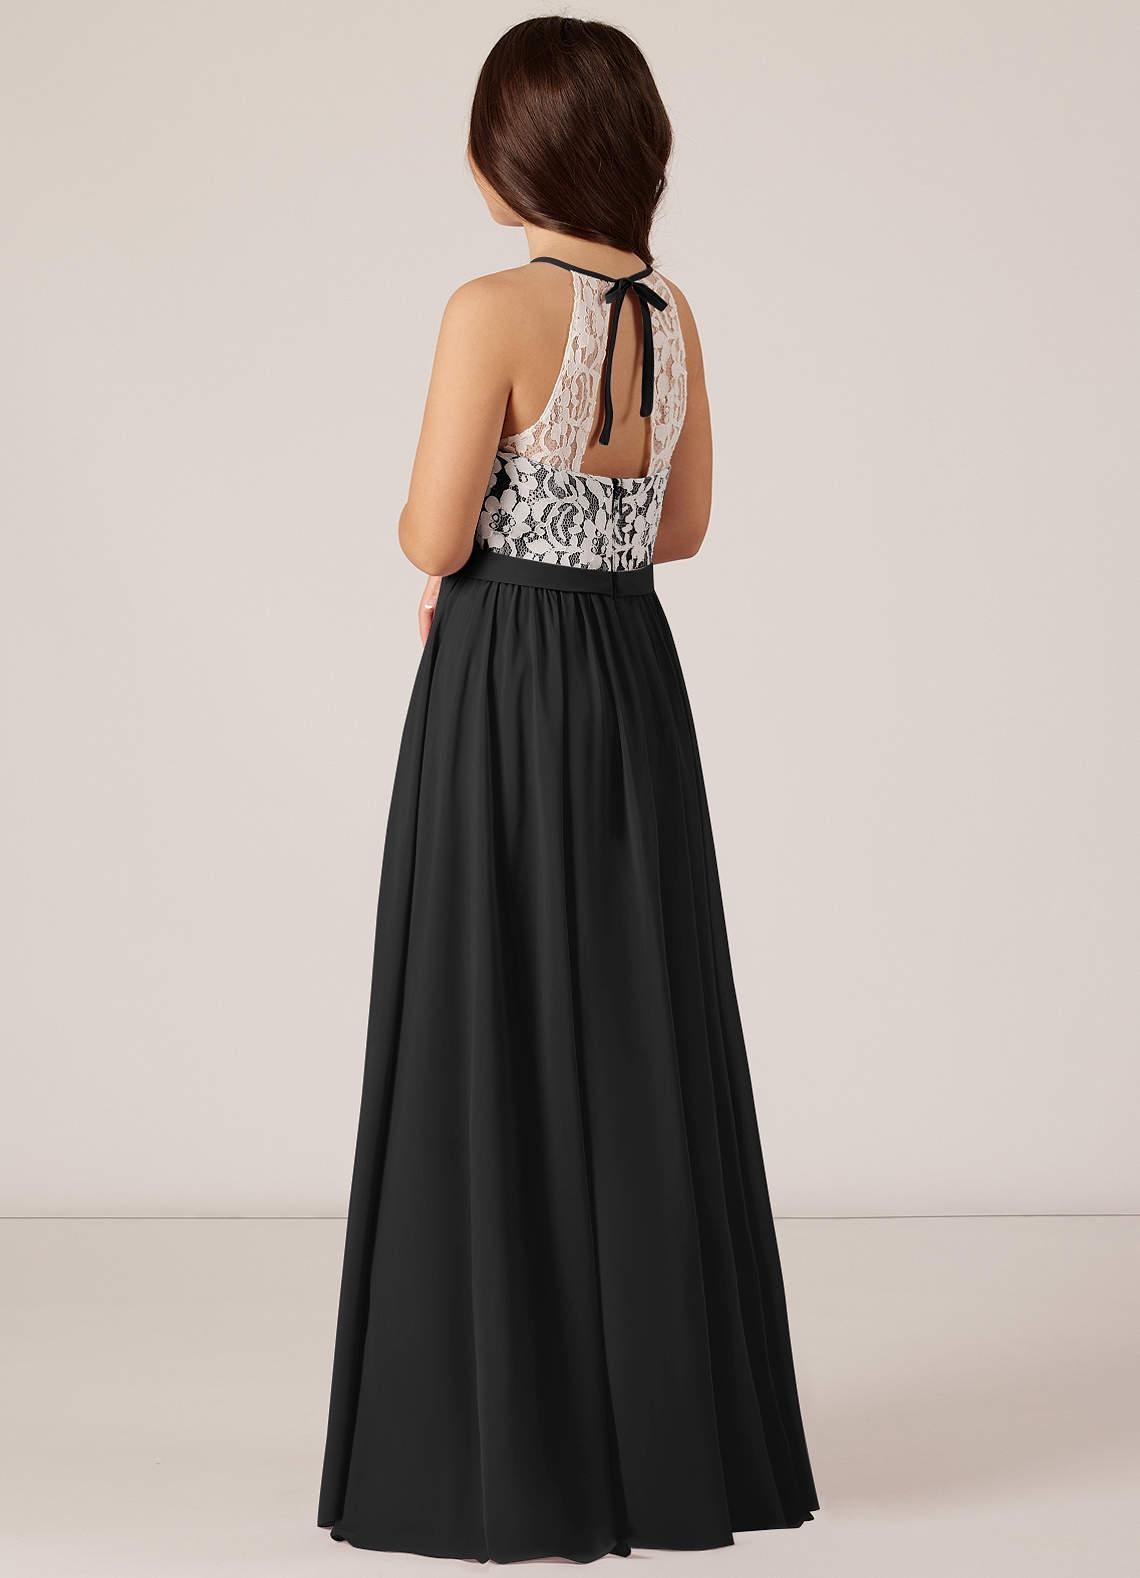 Azazie Fahari A-Line Lace Chiffon Floor-Length Junior Bridesmaid Dress image1